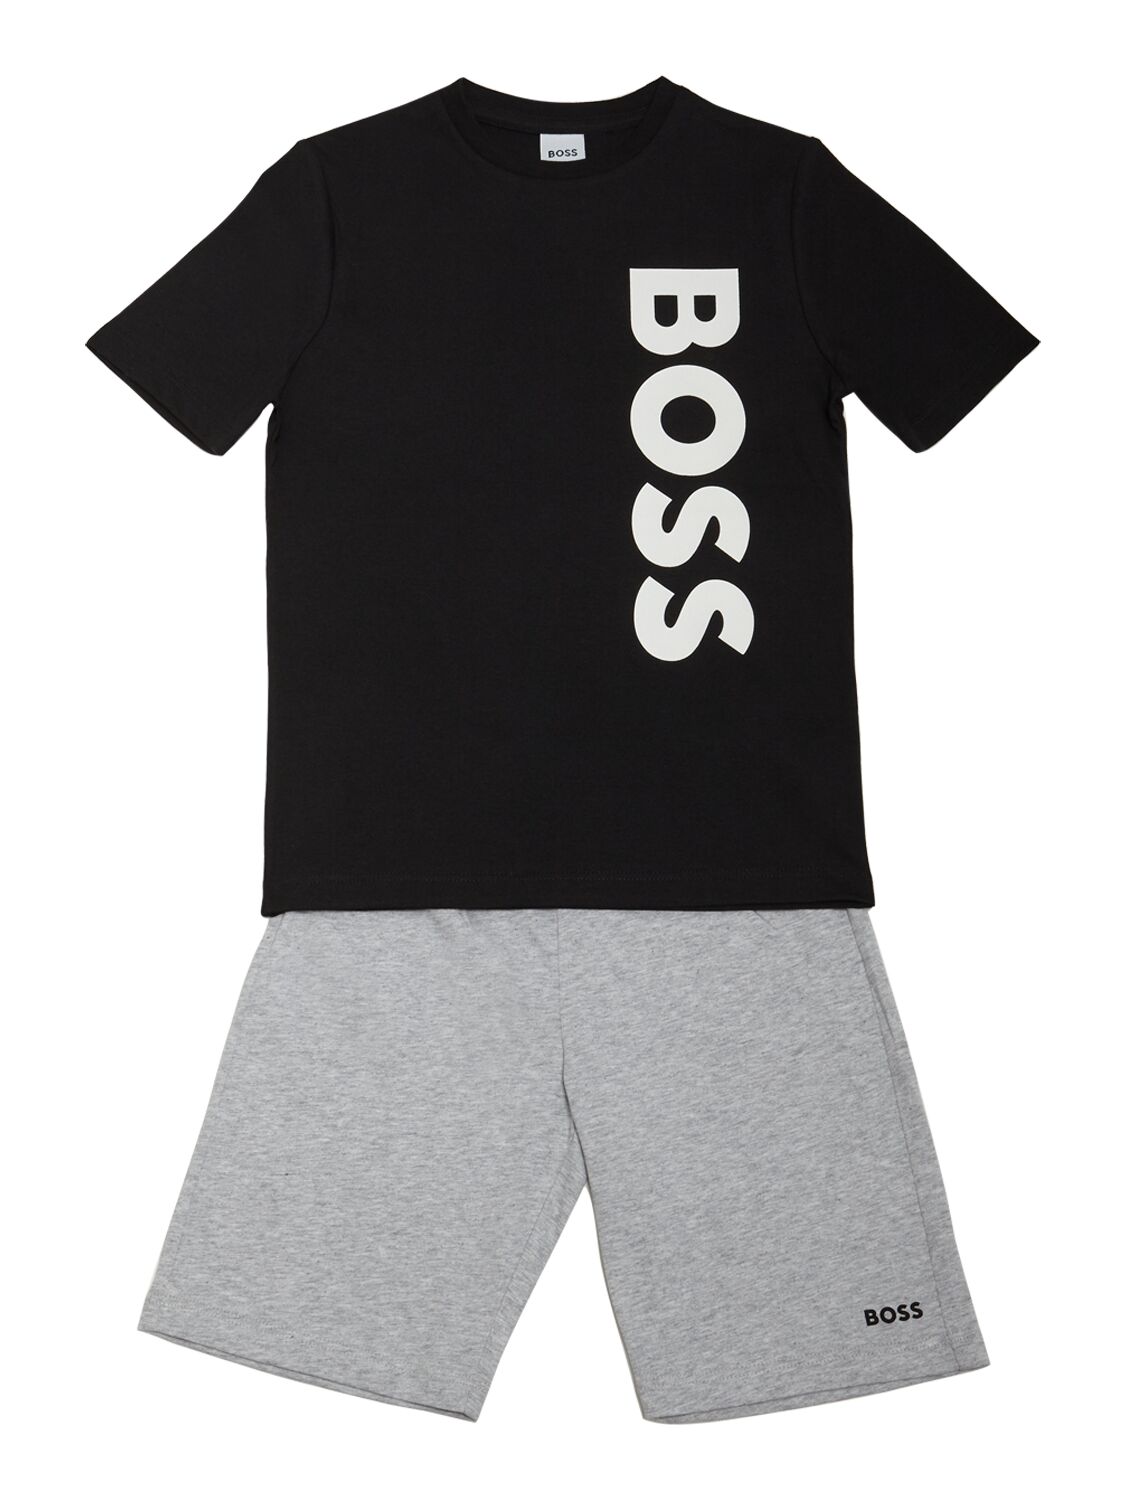 Hugo Boss Kids' Cotton Jersey T-shirt & Shorts In Black